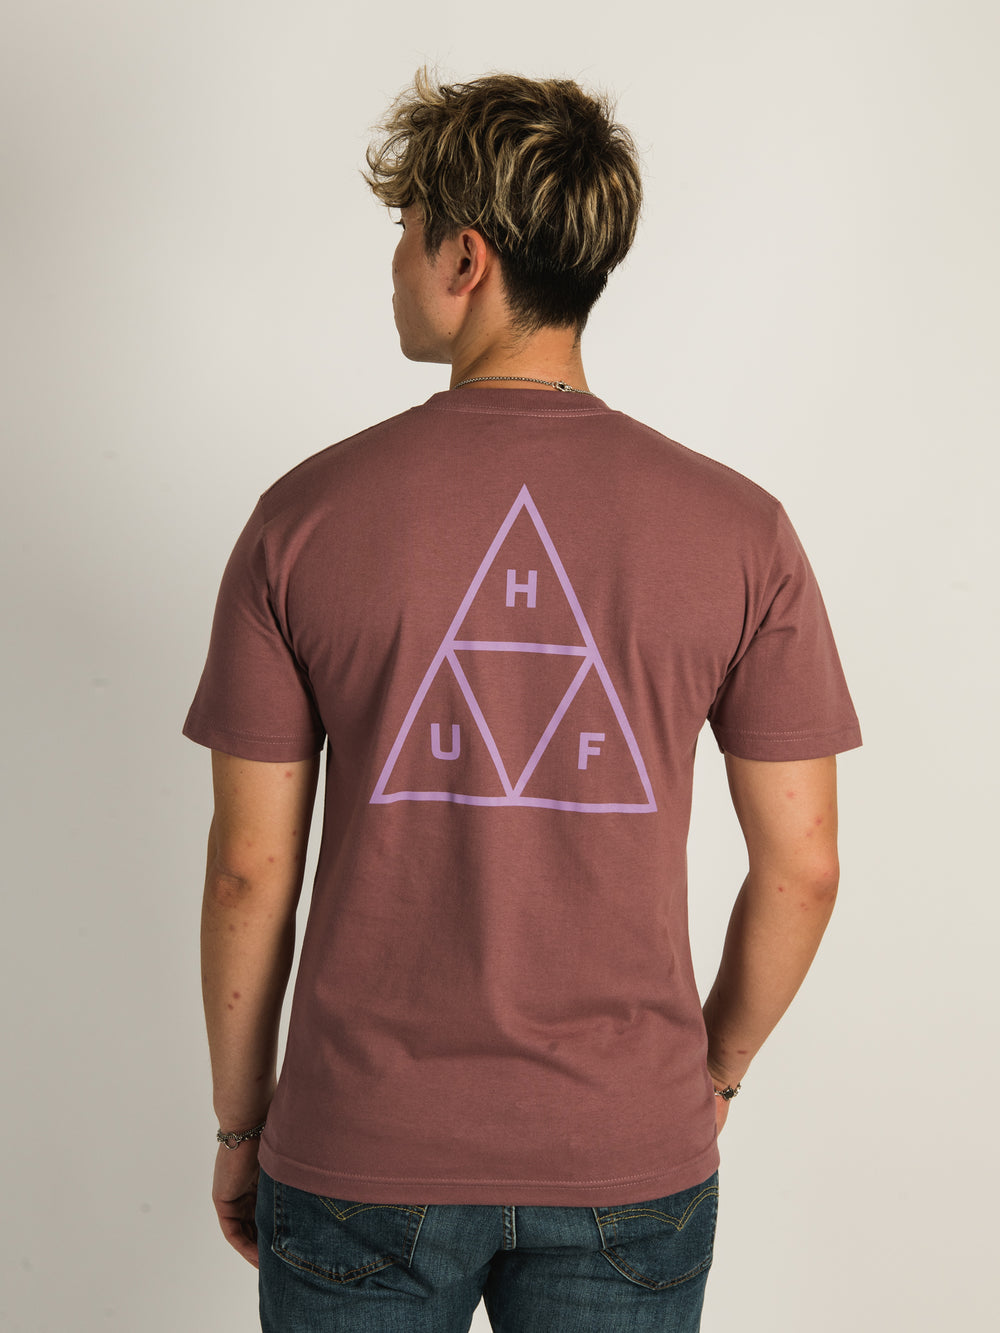 HUF Men's Essentials Triple Triangle Short Sleeve Tee / T-Shirt / Tshirt -  Athletic Grey